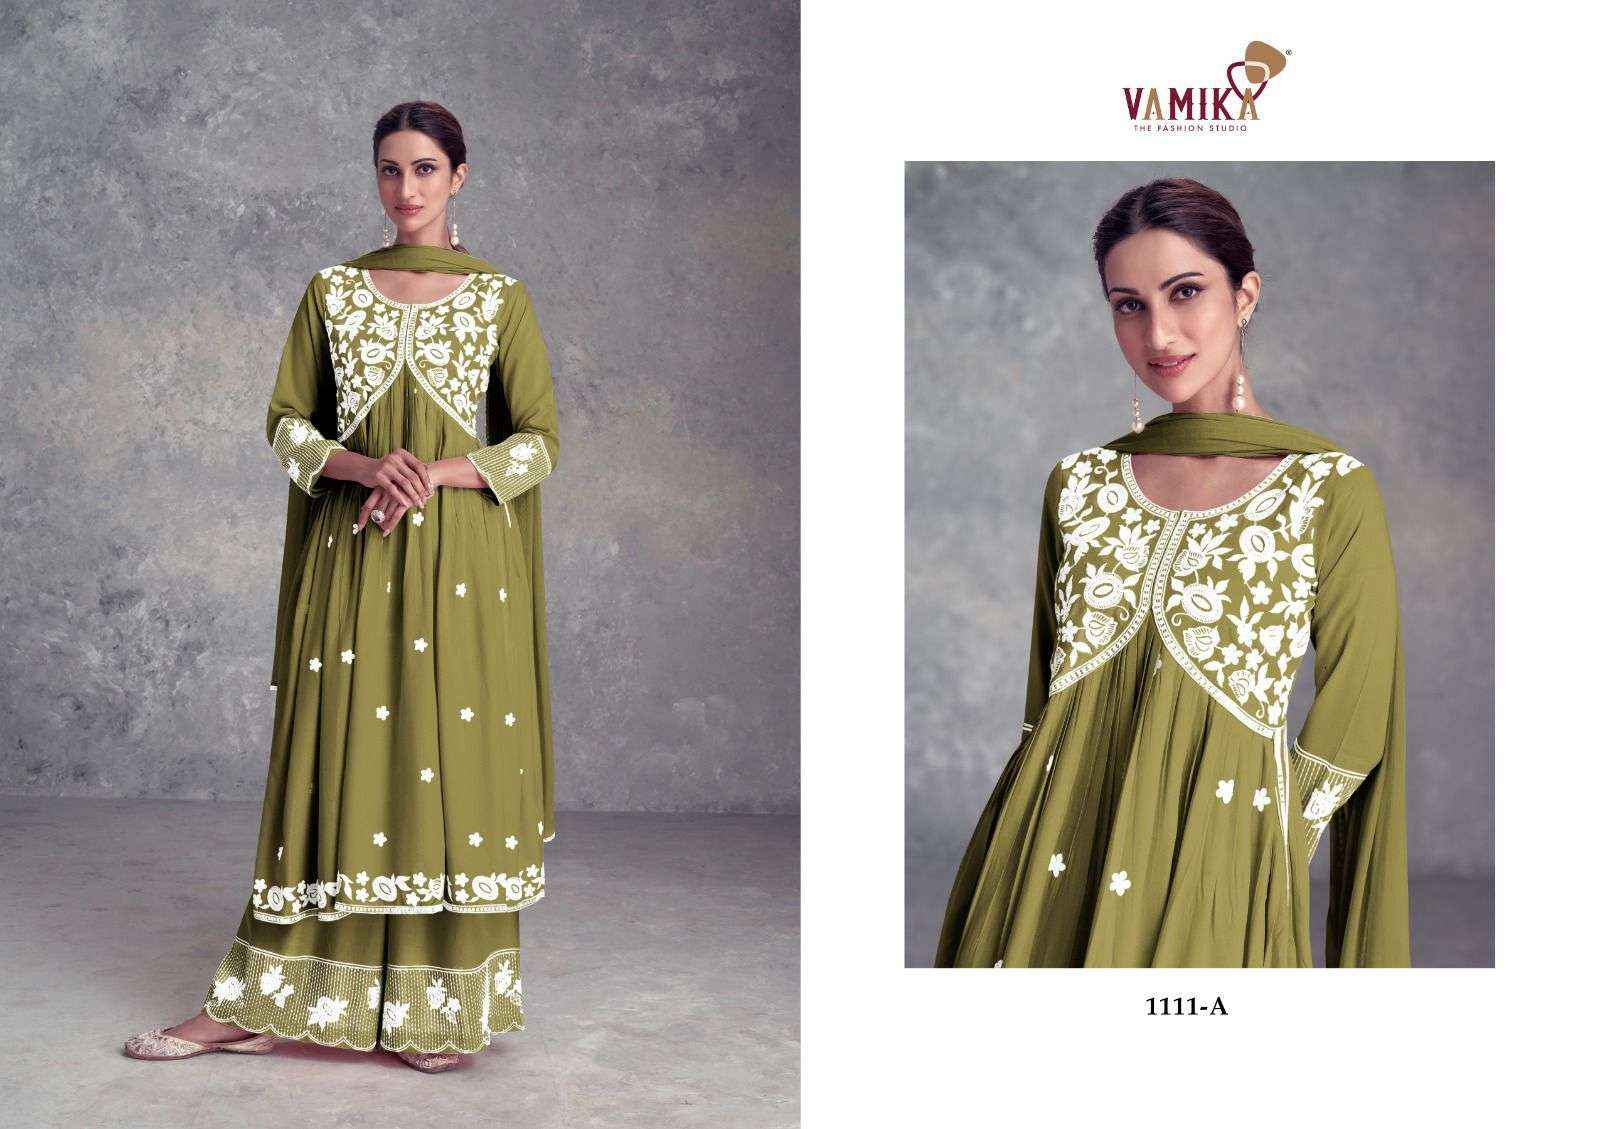 Vamika Aadhira Vol 9 Dark List Lucknowi Style Designers Suit ( 5 pcs Catalog )